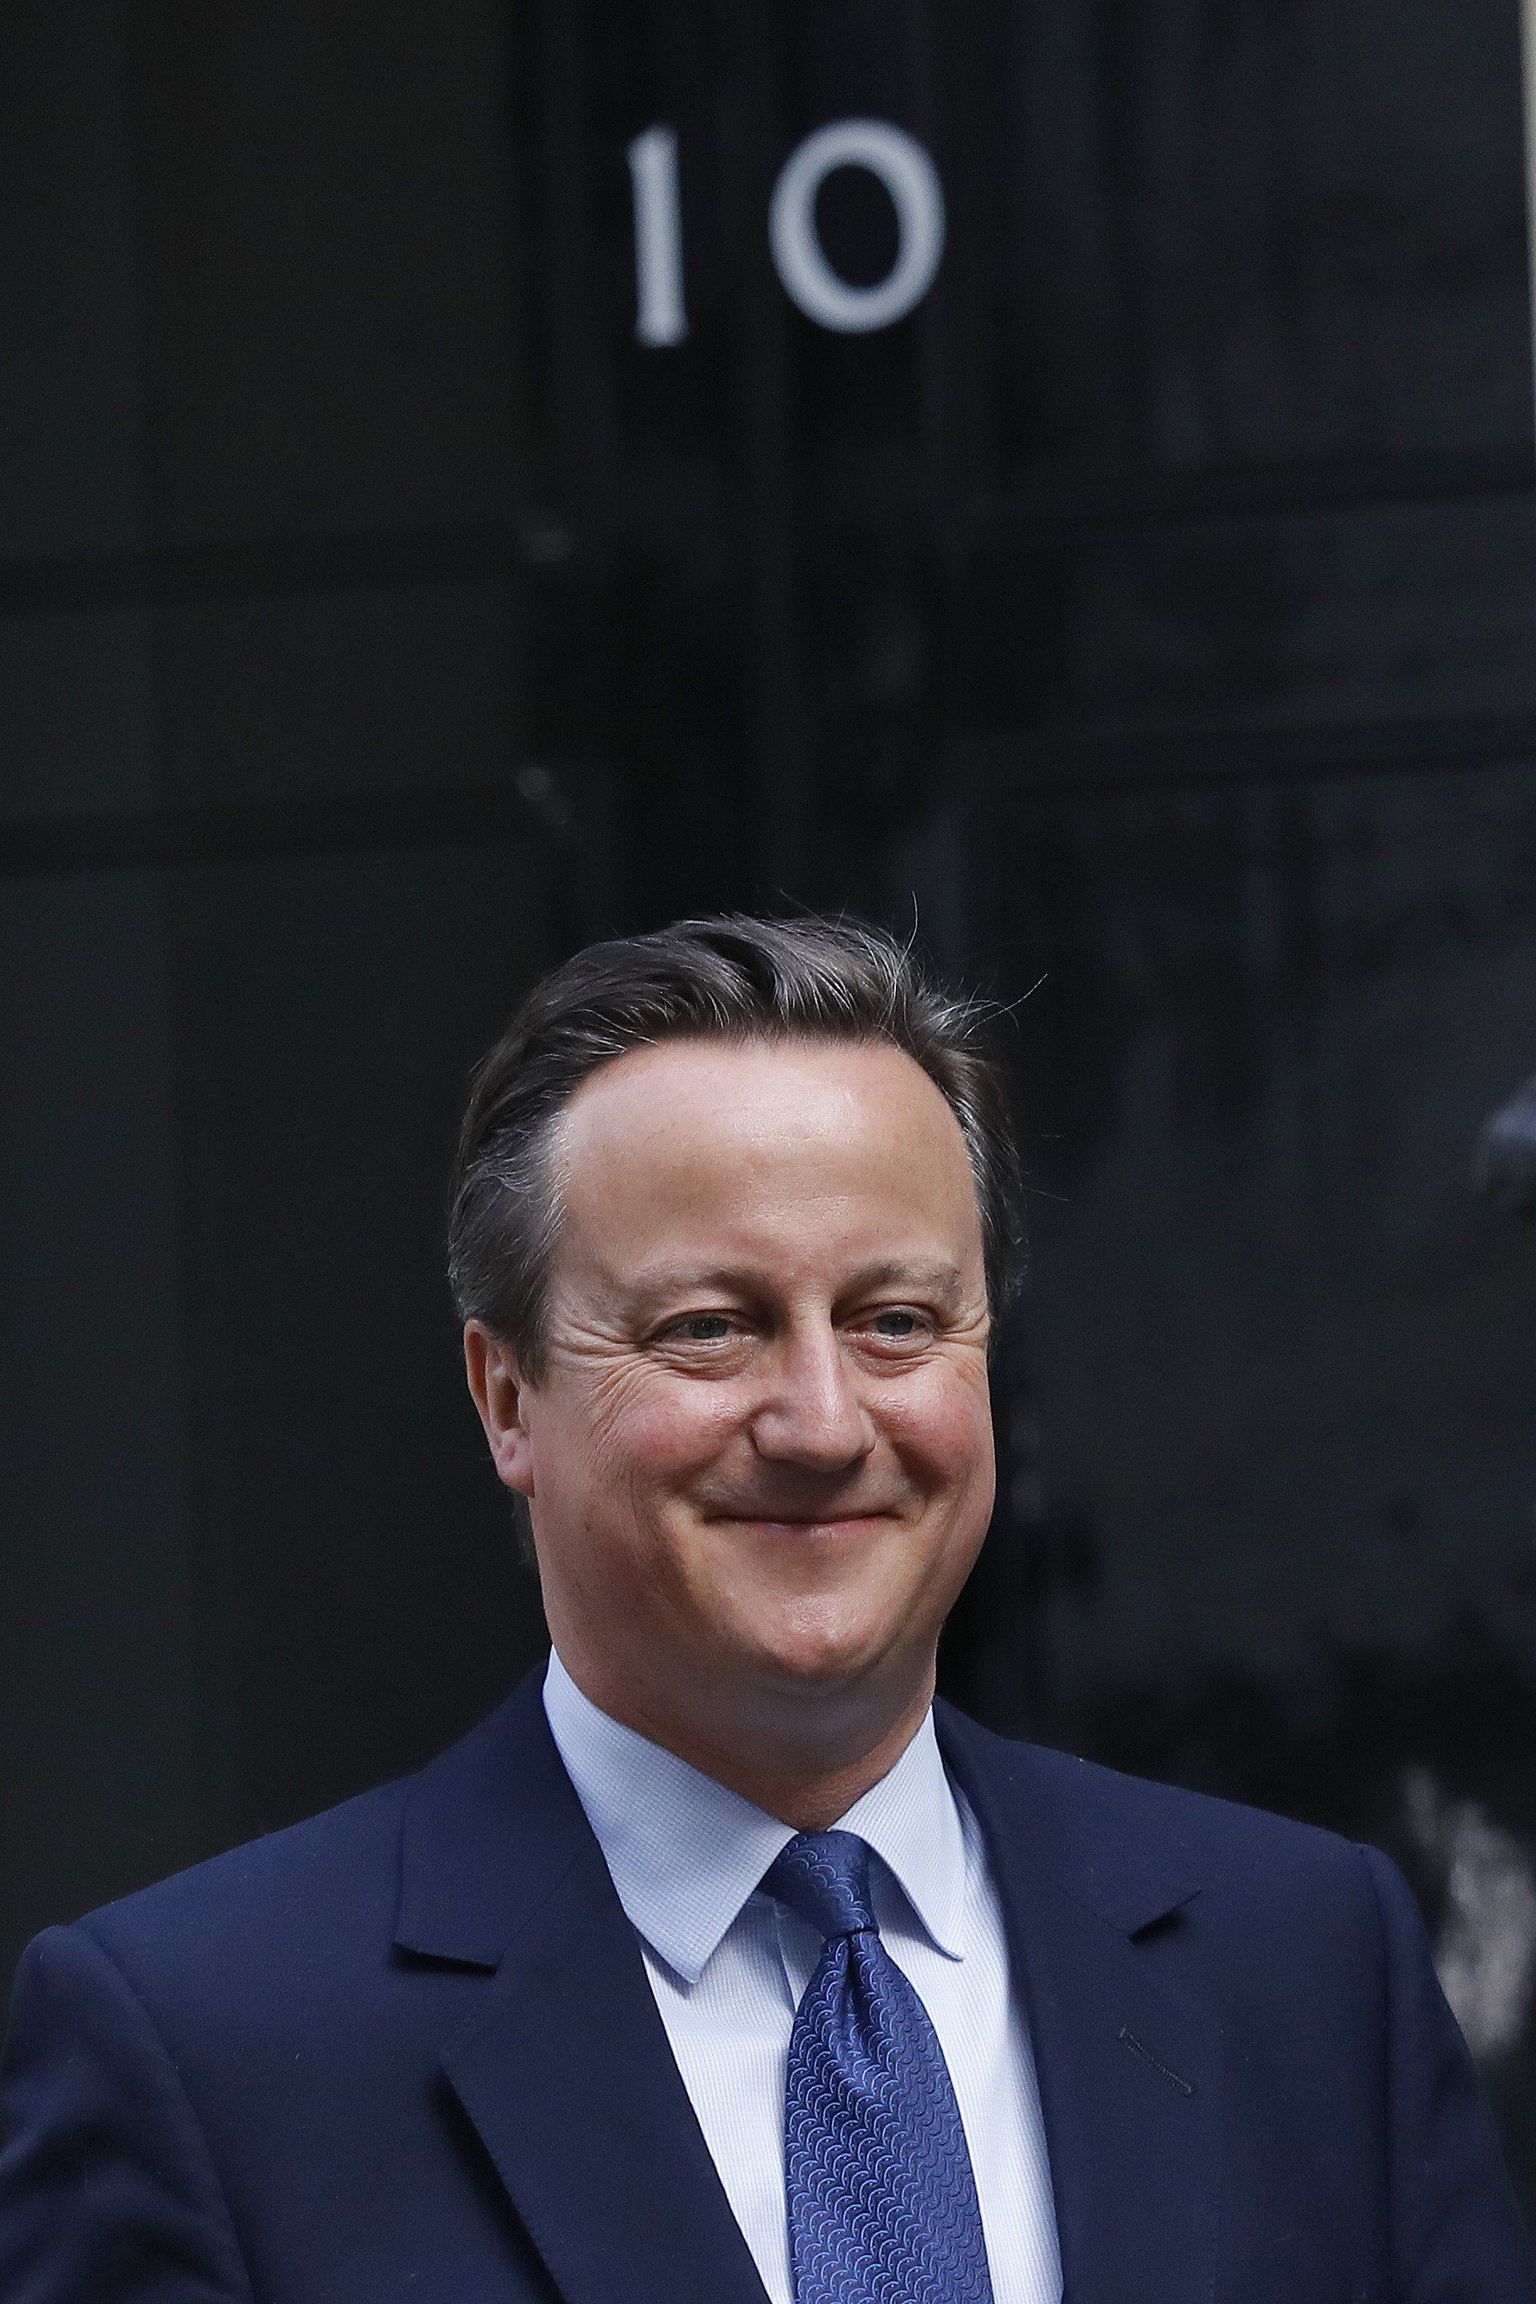 Nüüdseks endine peaminister David Cameron 10 Downing Streetilt lahkumas